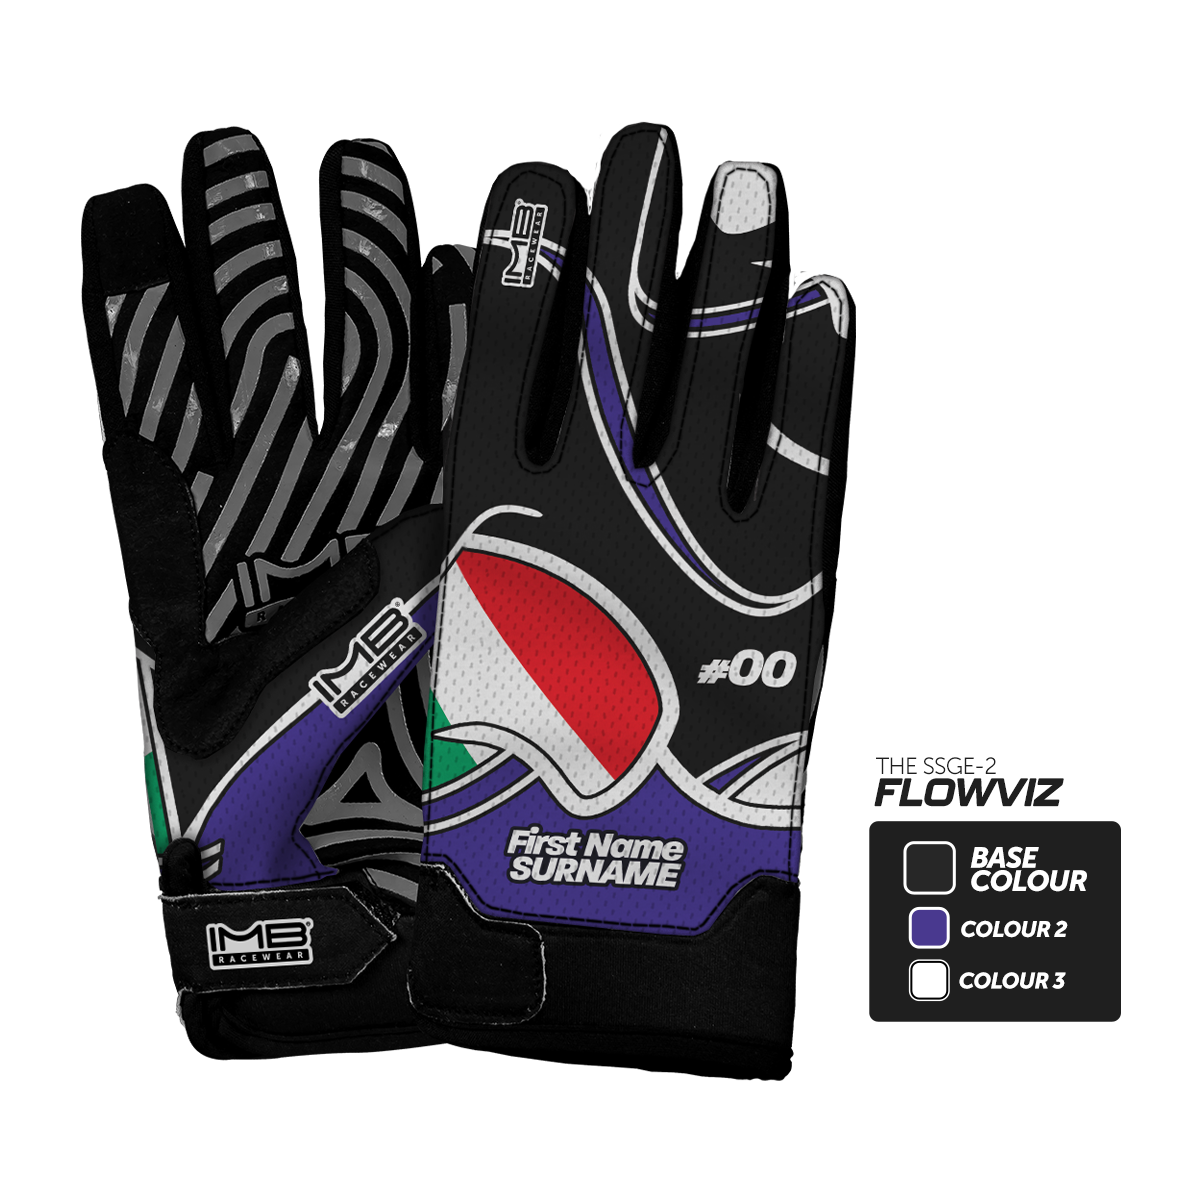 The Flowviz SSGE-2 Short Sim Racing Gloves